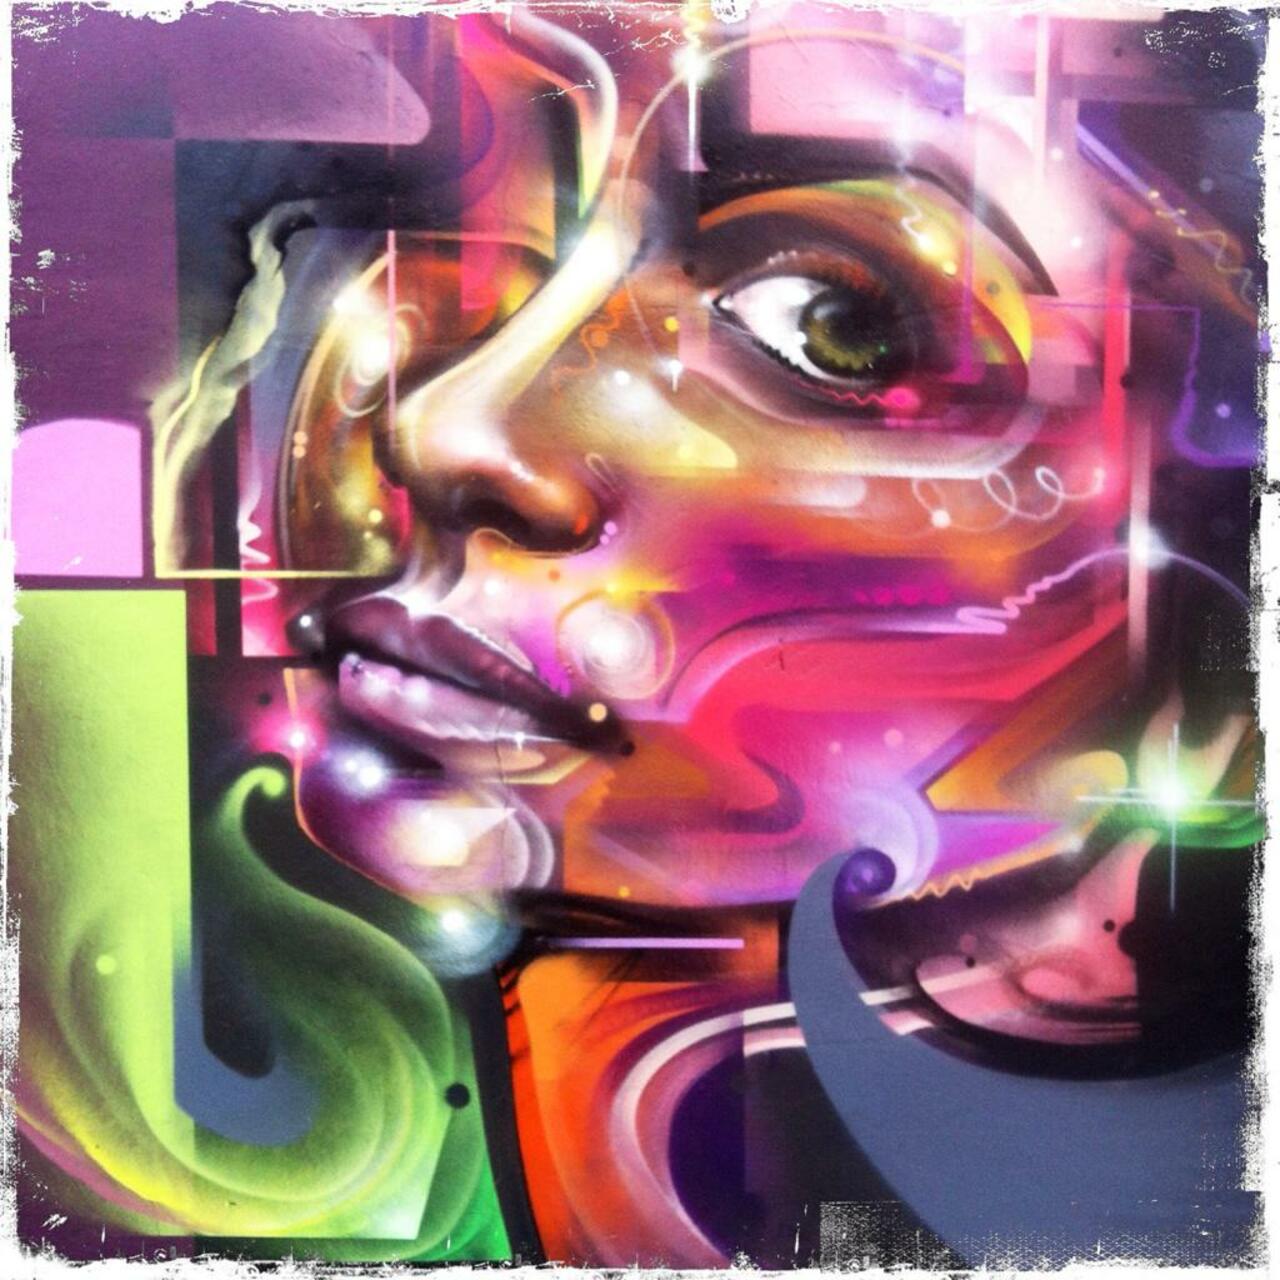 RT @BrickLaneArt: Stunning new work from @mrcenzgraffiti on Fashion Street #art #streetart #graffiti http://t.co/XvEMKphJEd